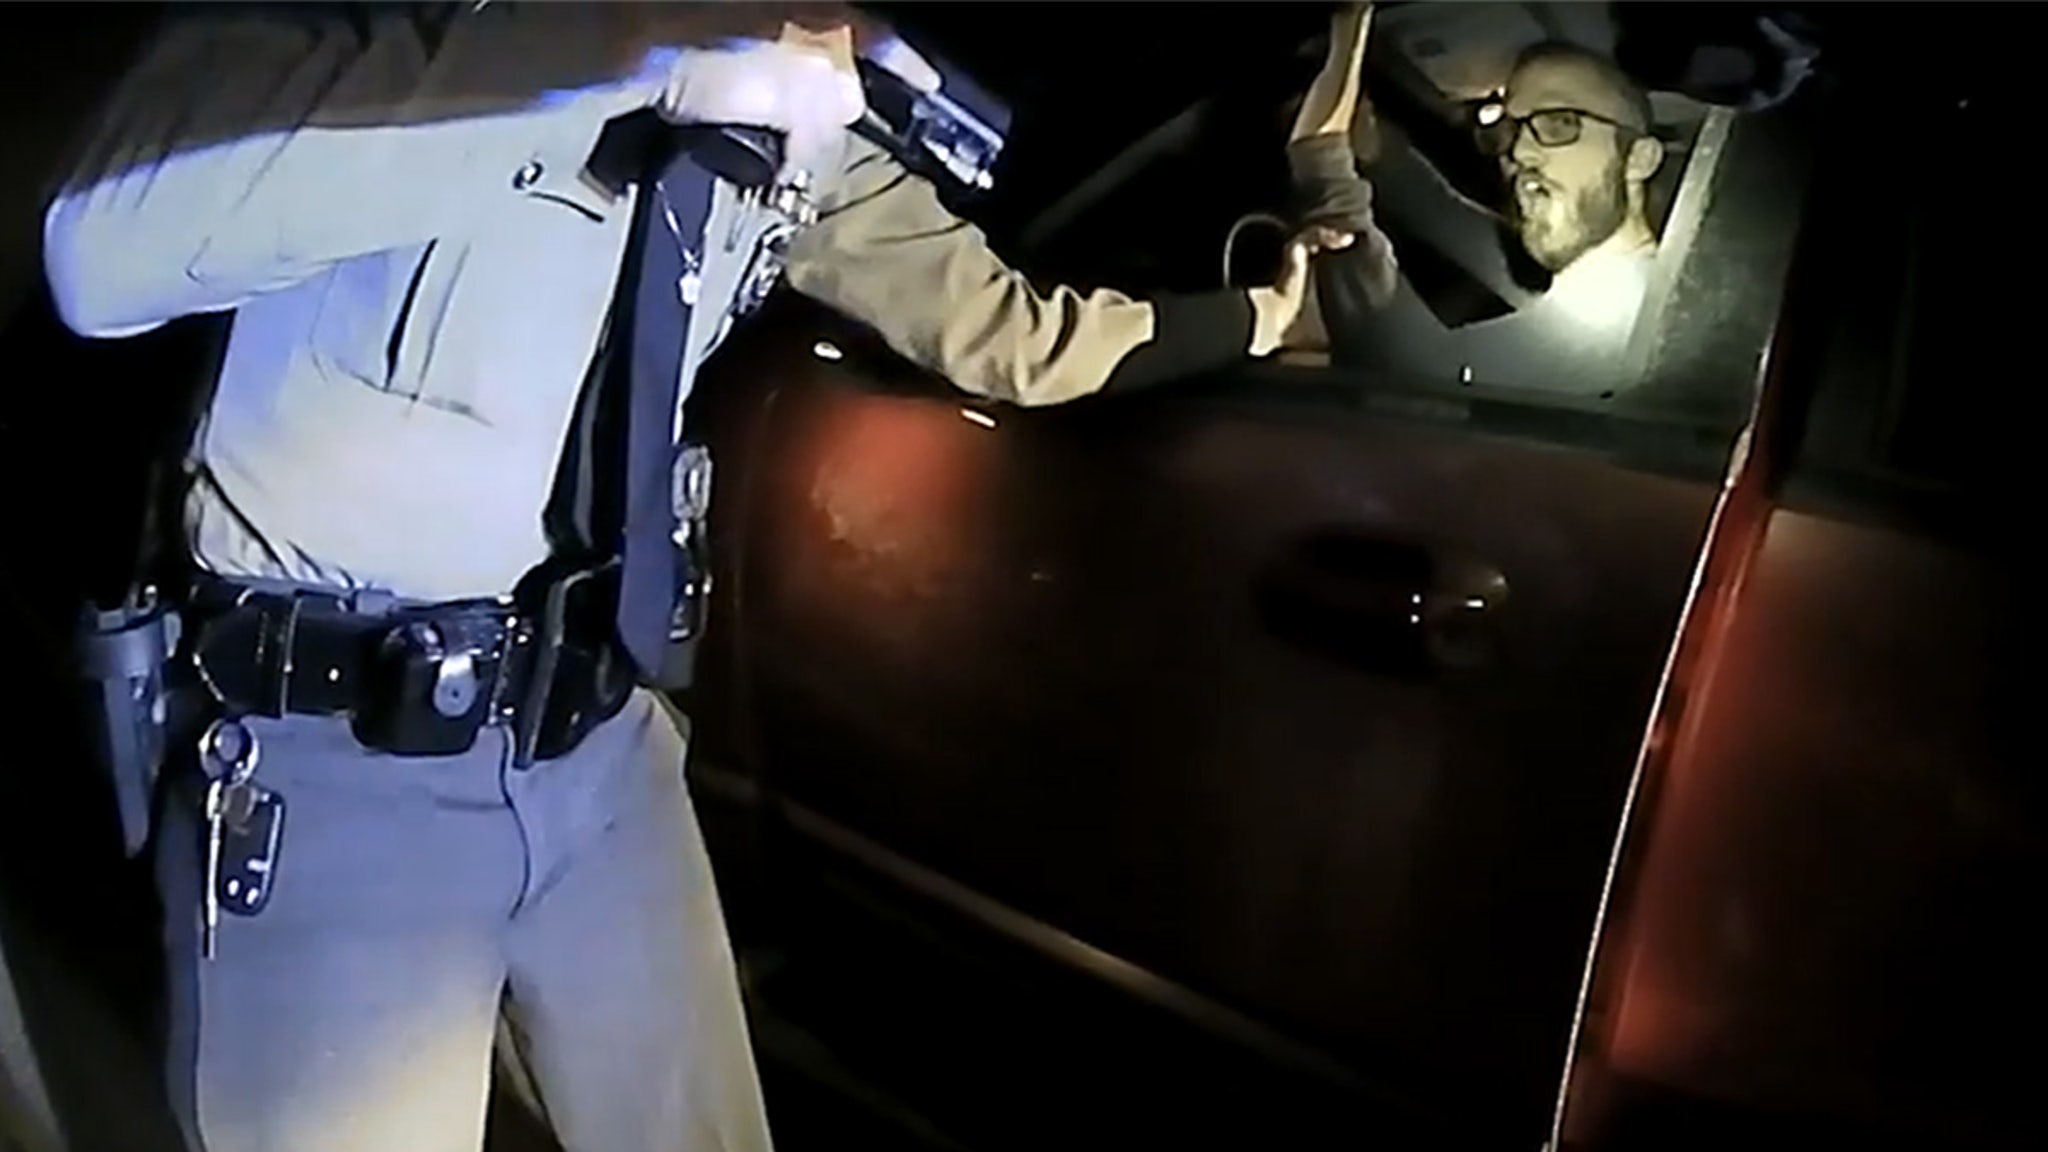 Wild Body Cam Video Shows White Suspect Threaten To Shoot Cop In Police